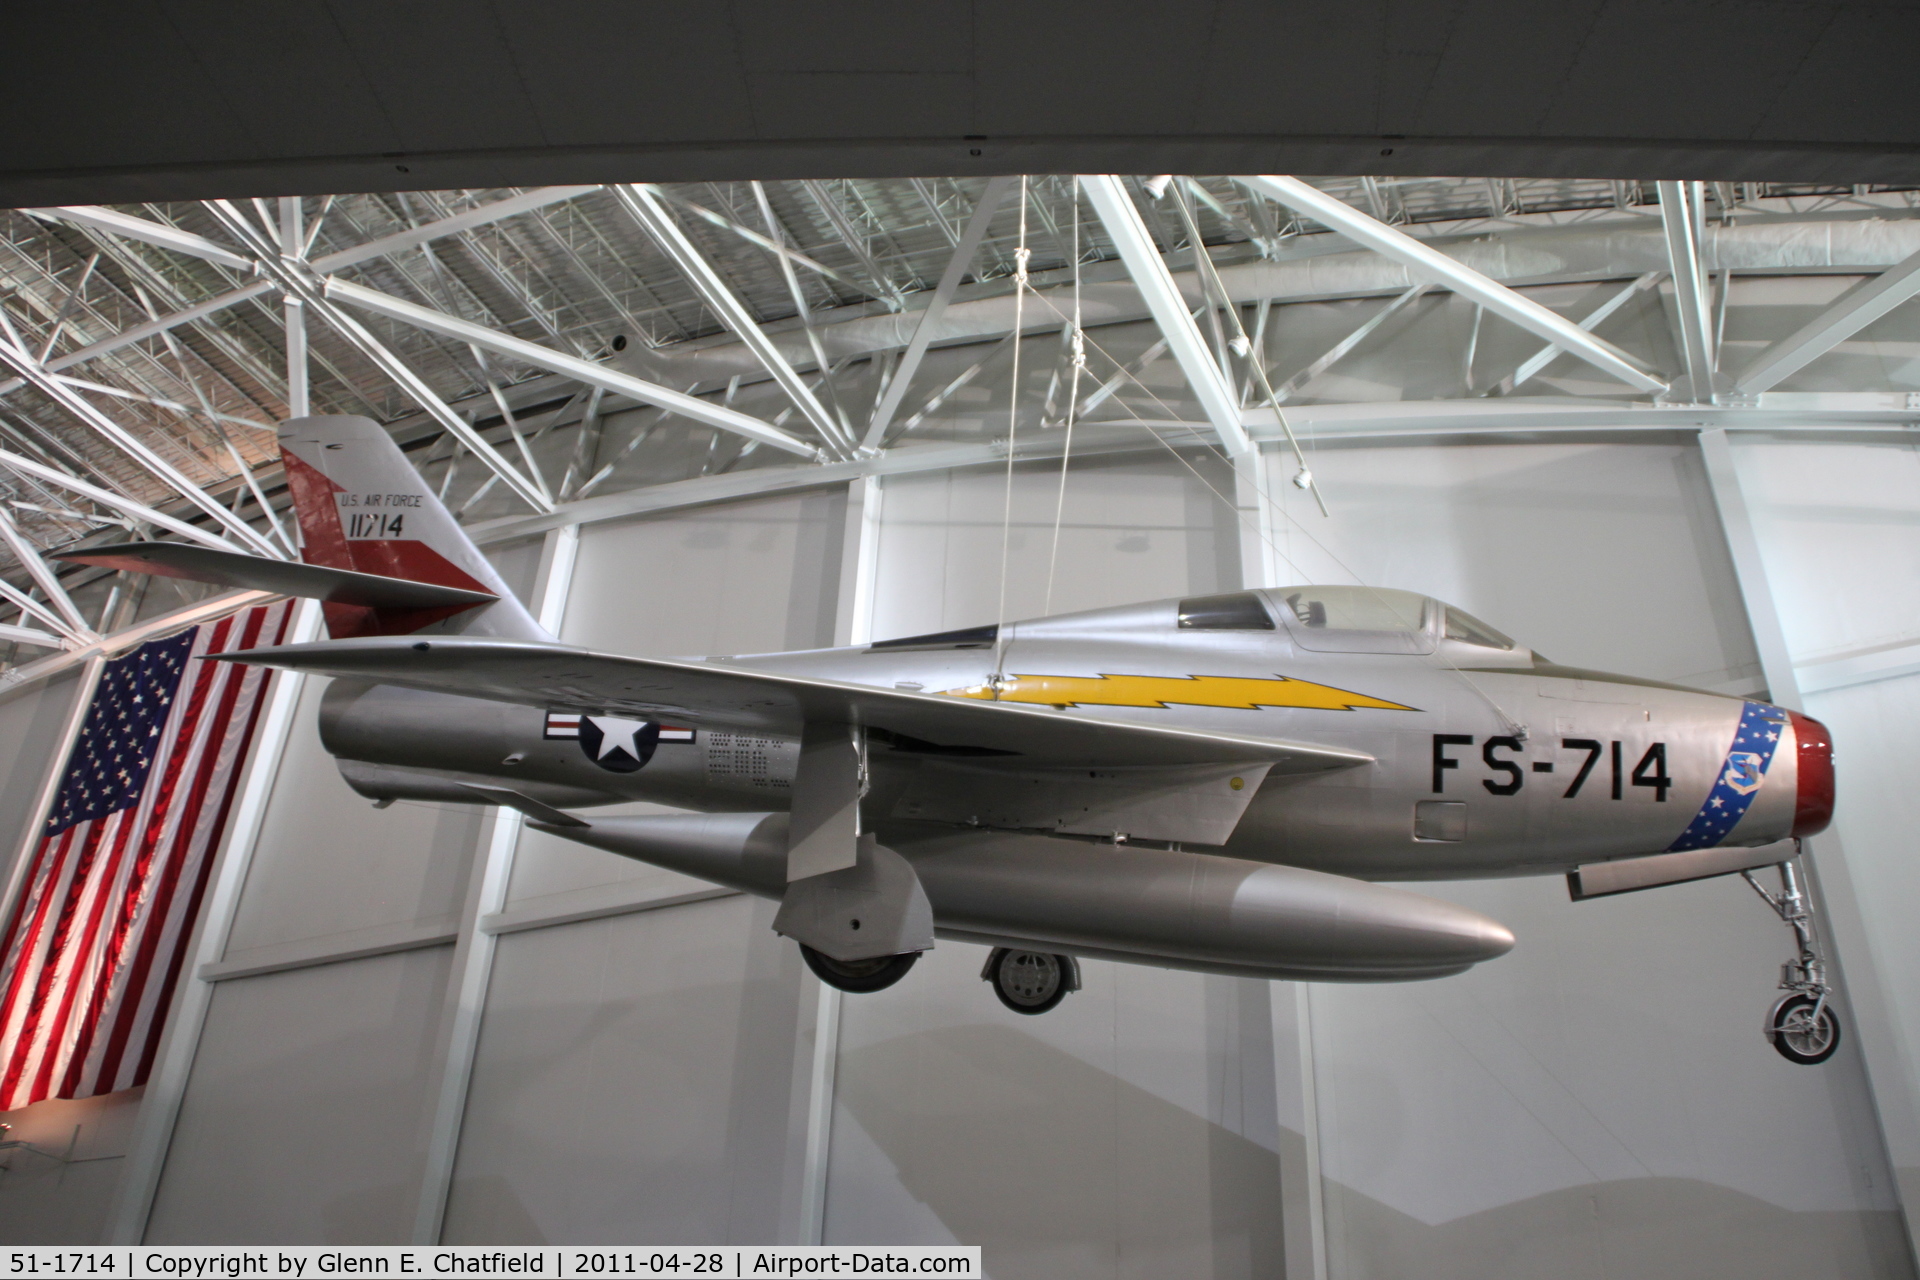 51-1714, 1951 Republic F-84F-25-RE Thunderstreak C/N Not found 51-1714, At the Strategic Air & Space Museum